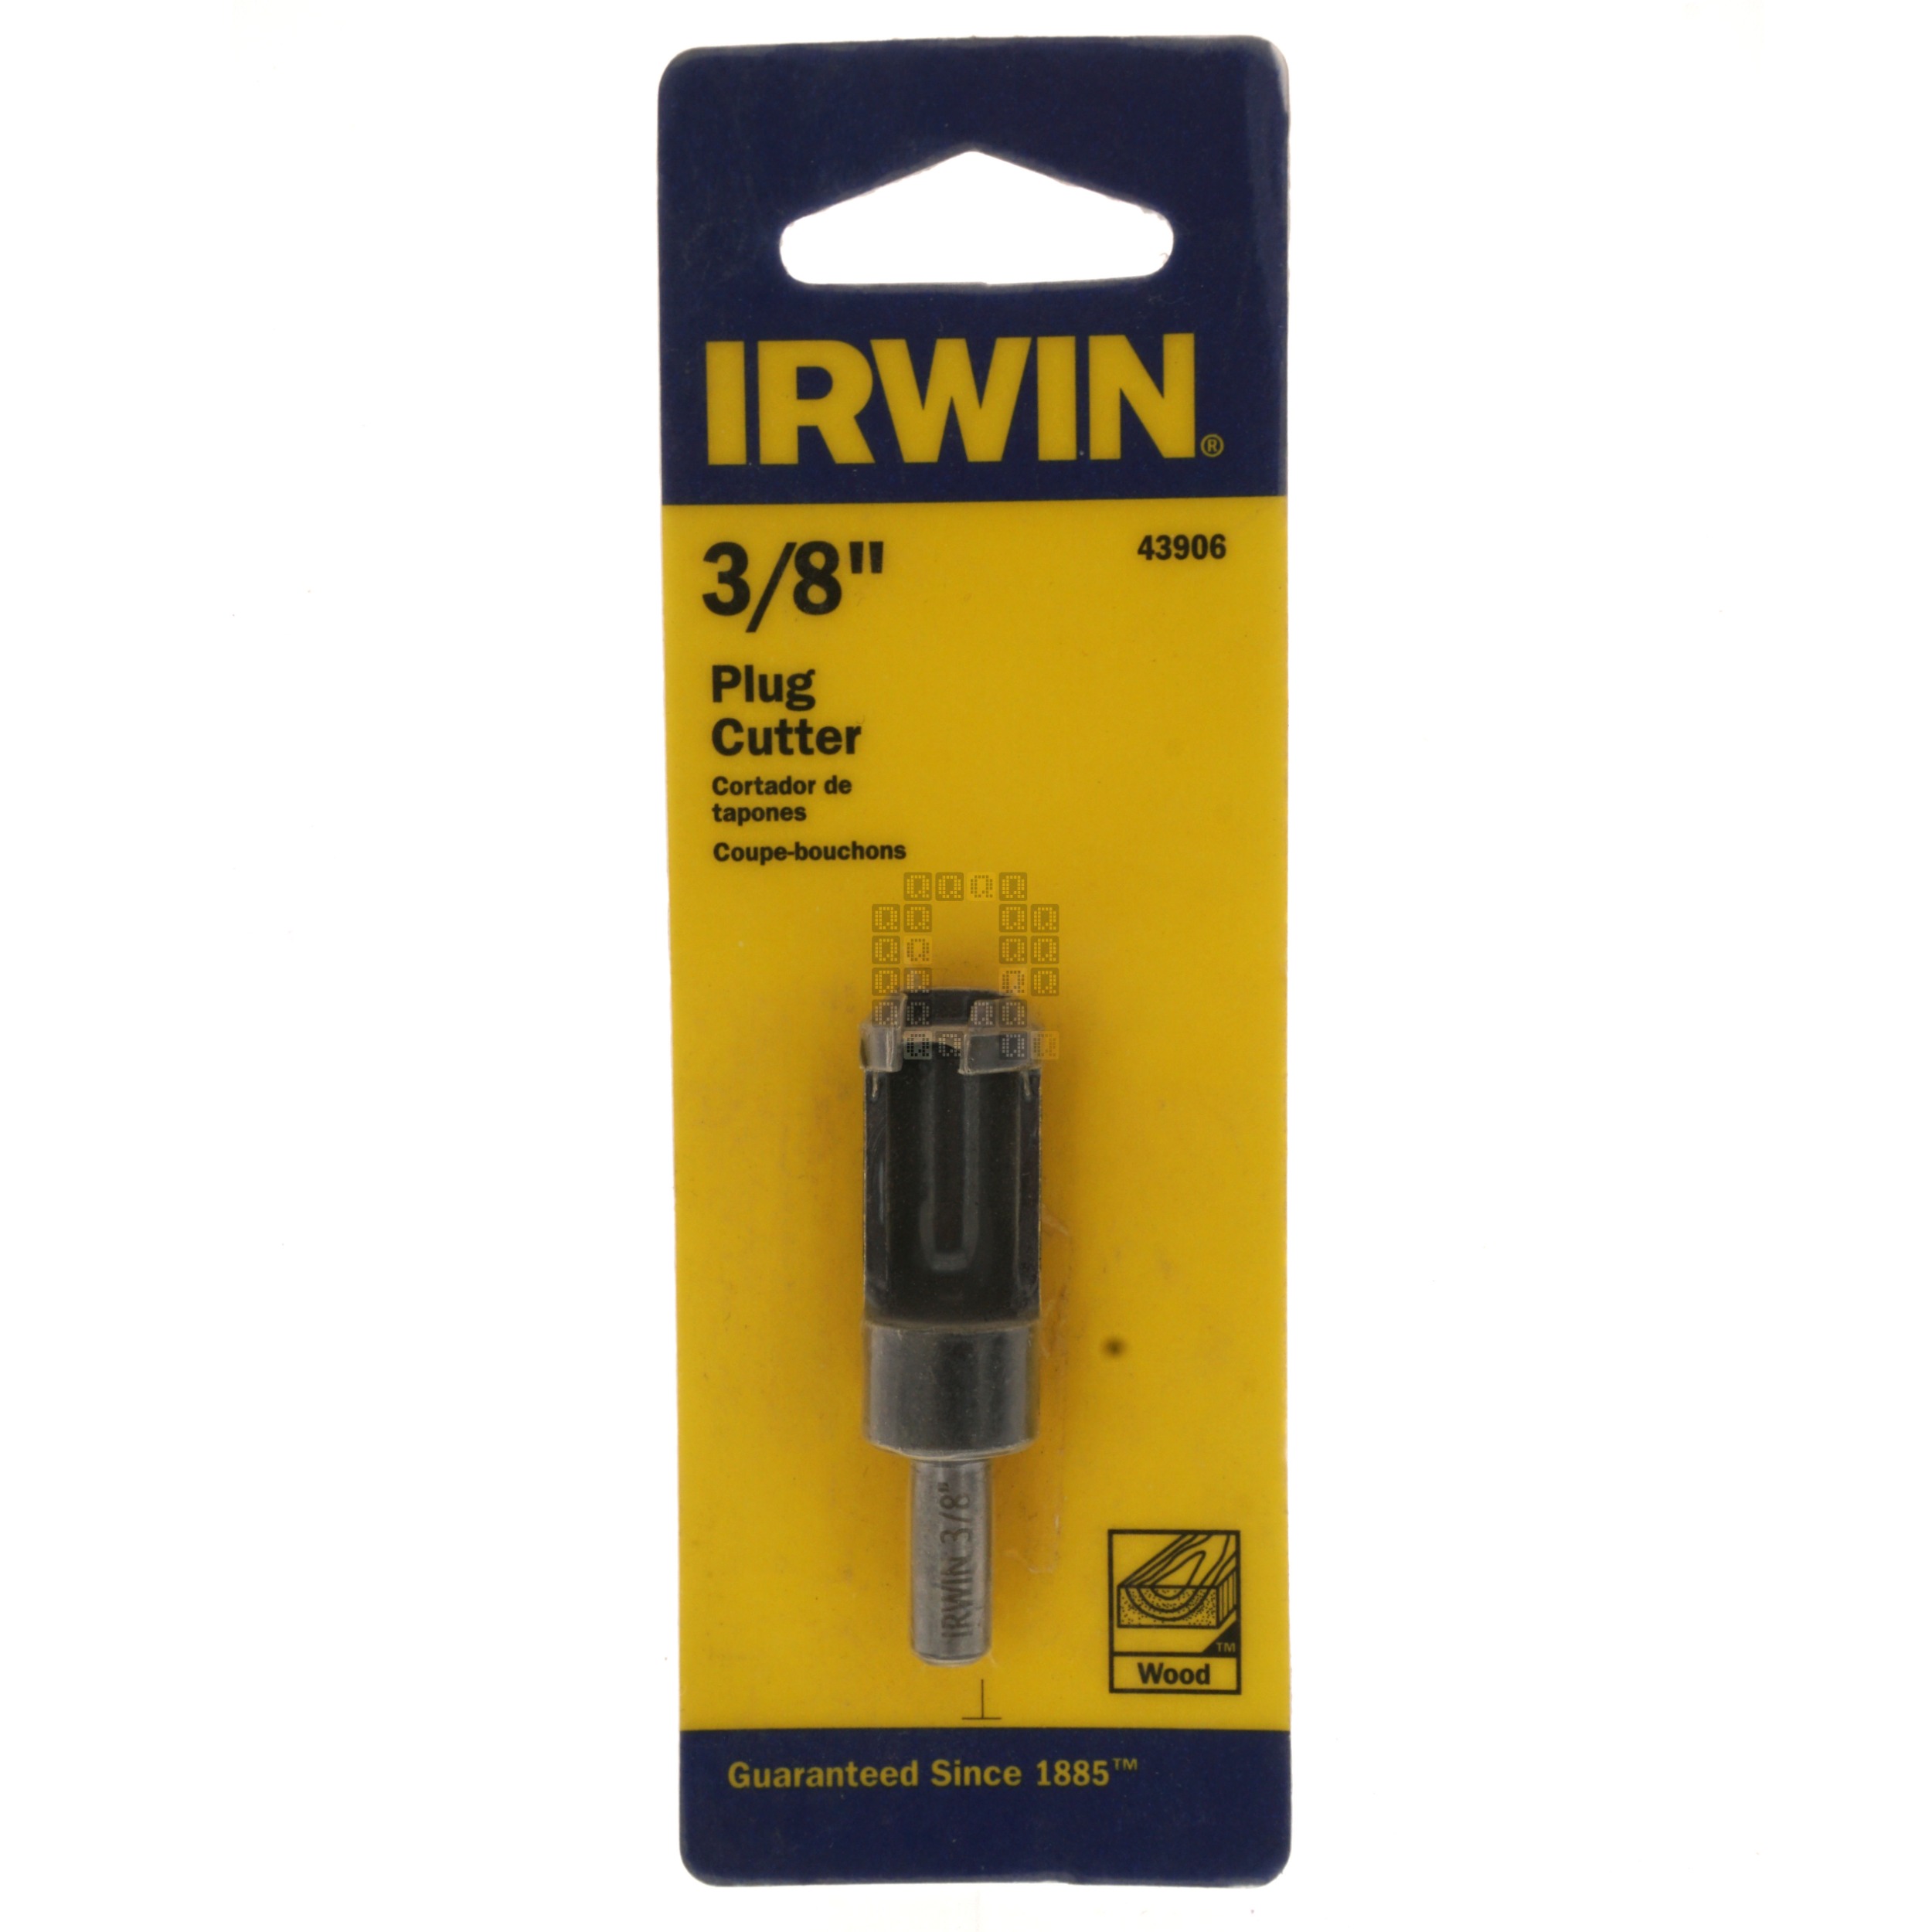 Irwin Tools 43906 3/8" Plug Cutter, 1/4" Straight Shank